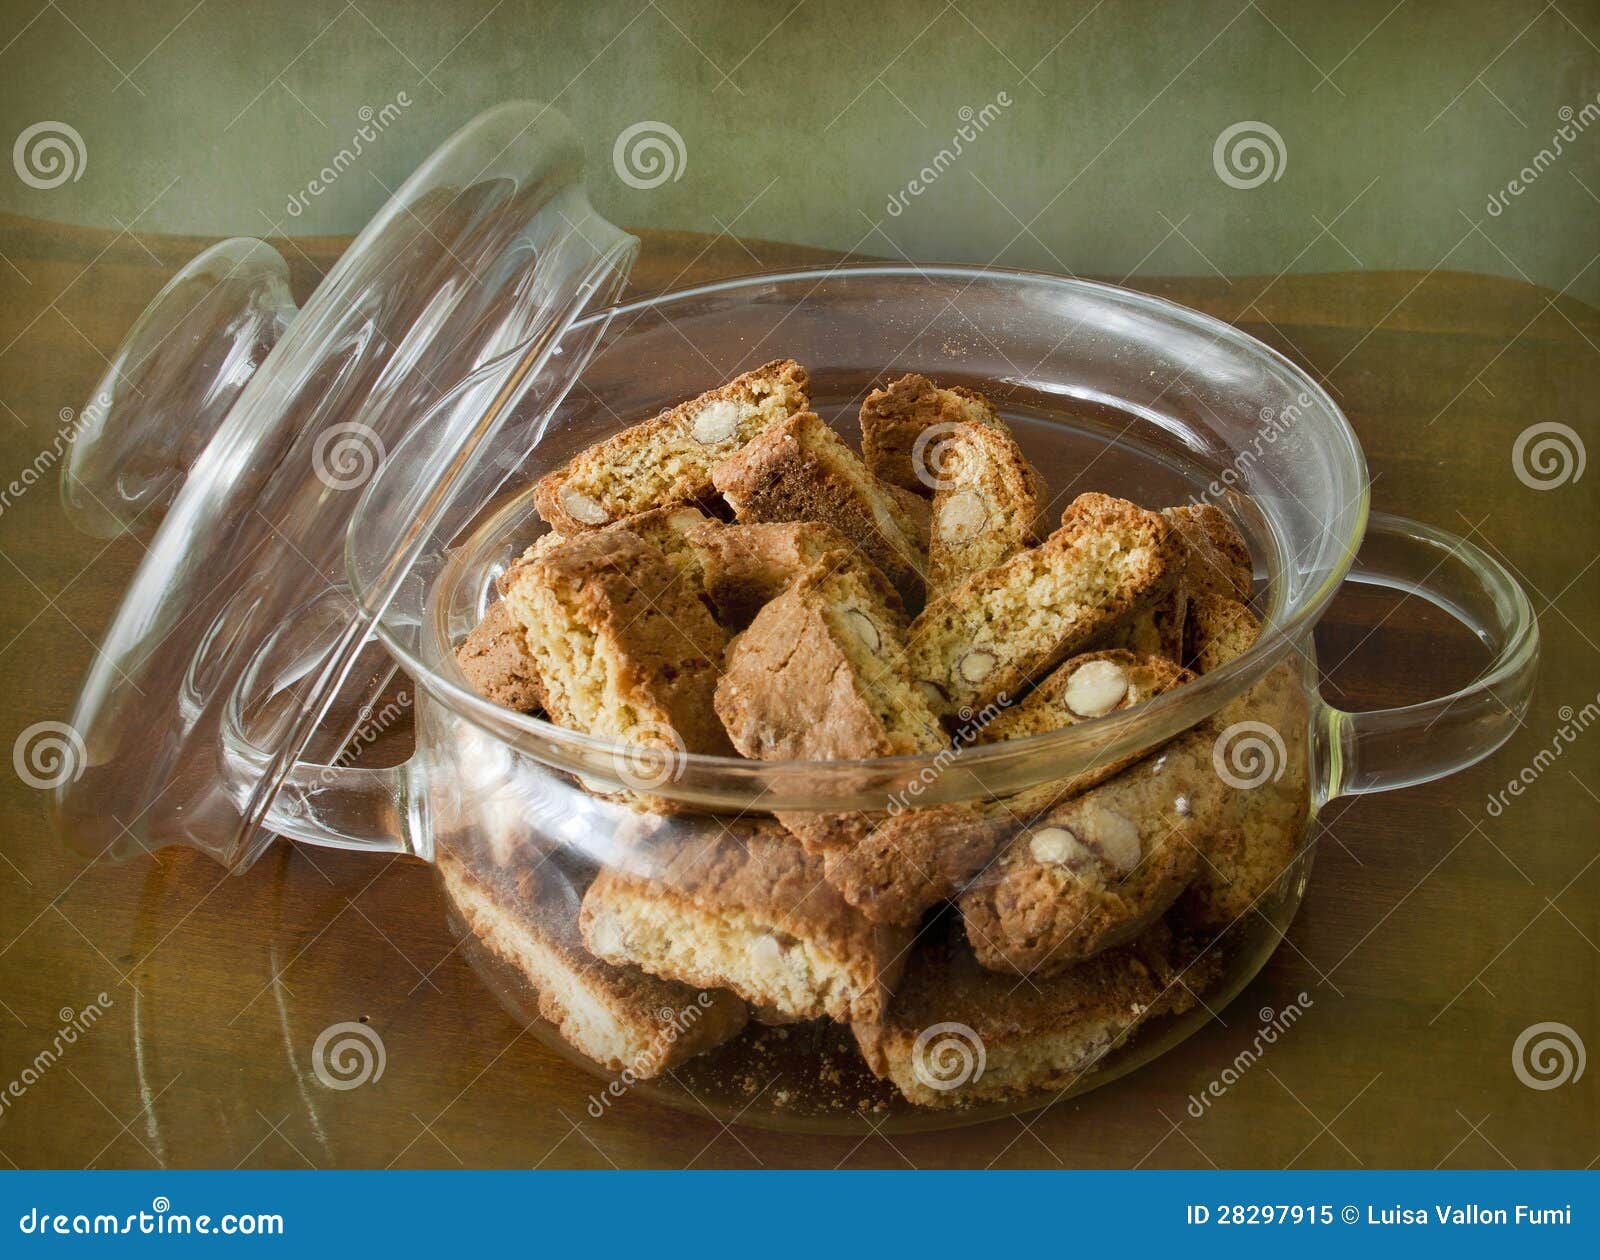 italian almond cookies, cantucci